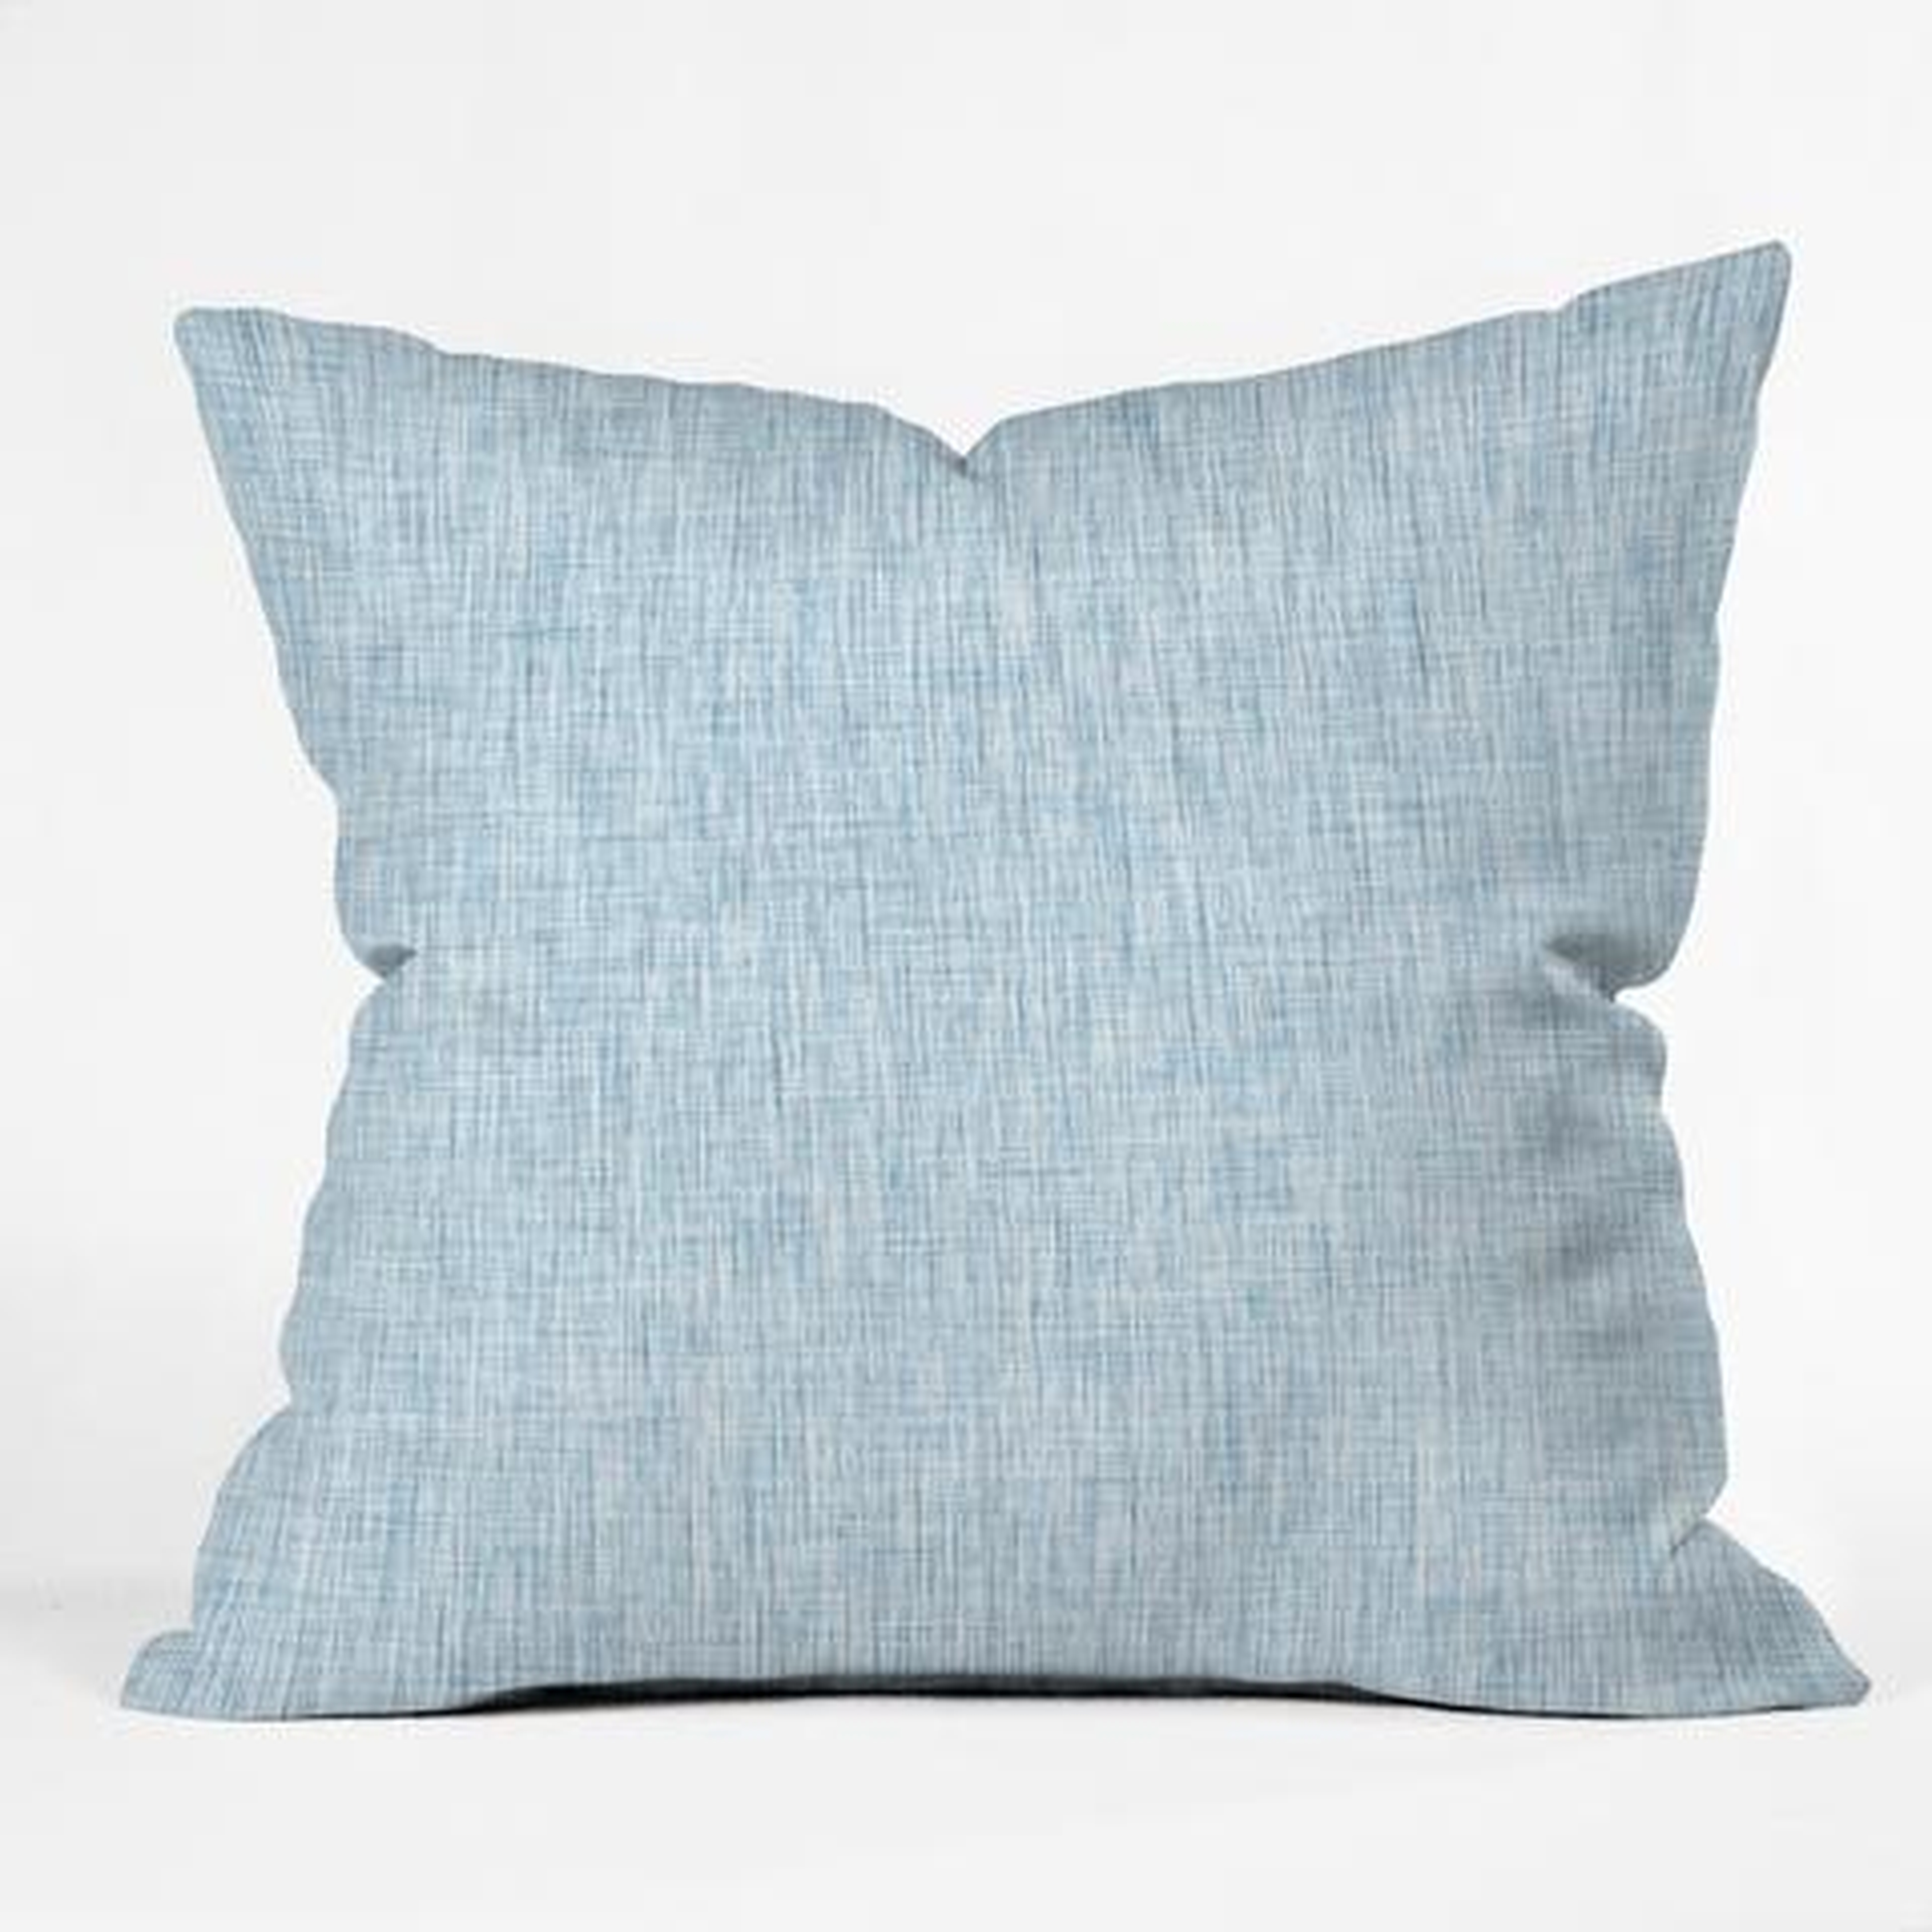 Linen Acid-Wash Throw Pillow with insert, Blue, 20" x 20" - Wander Print Co.